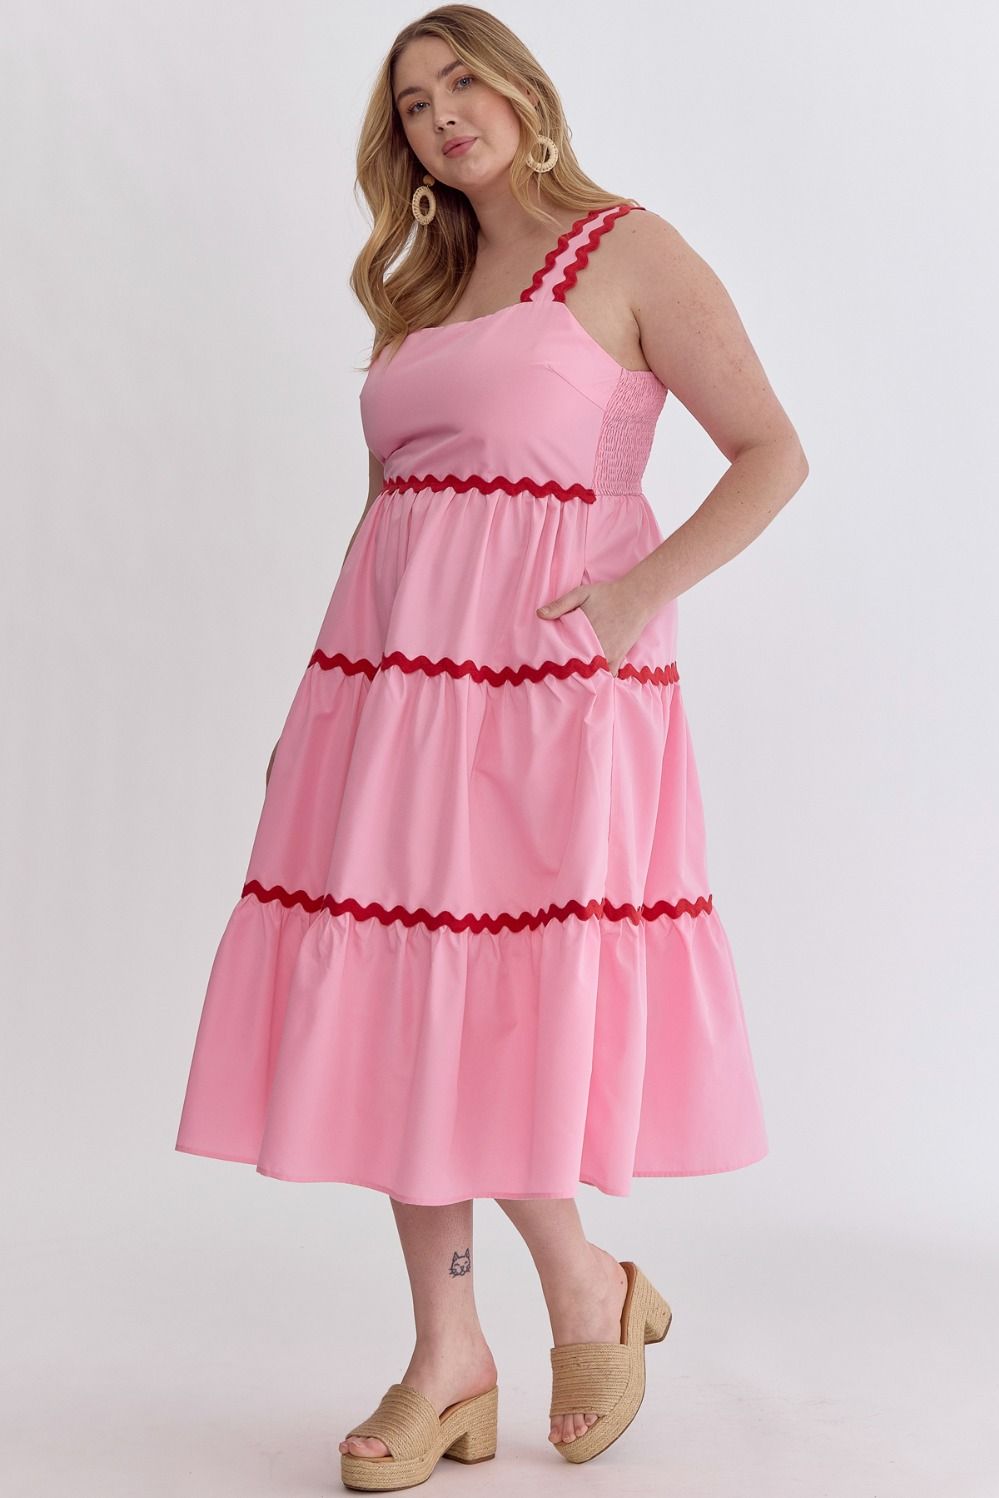  Entro Bianca Ric Rac Dress -Pink, sleeveless, ric rack trim, tiered, square neck, pockets, smocking at back, plus size